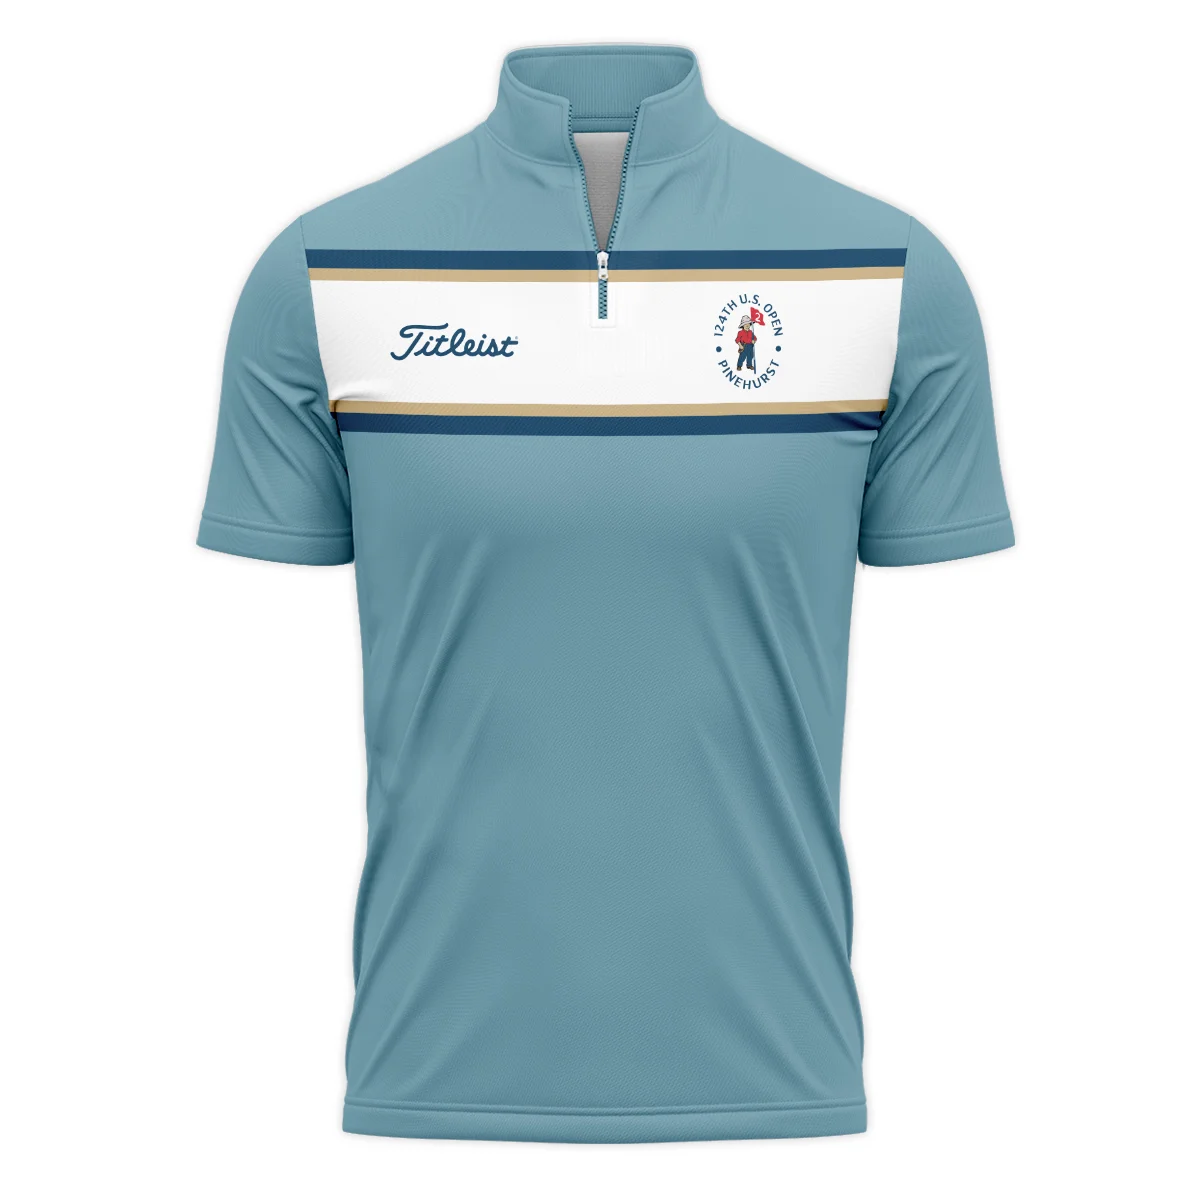 124th U.S. Open Pinehurst Golf Sport Mostly Desaturated Dark Blue Yellow Titleist Zipper Hoodie Shirt Style Classic